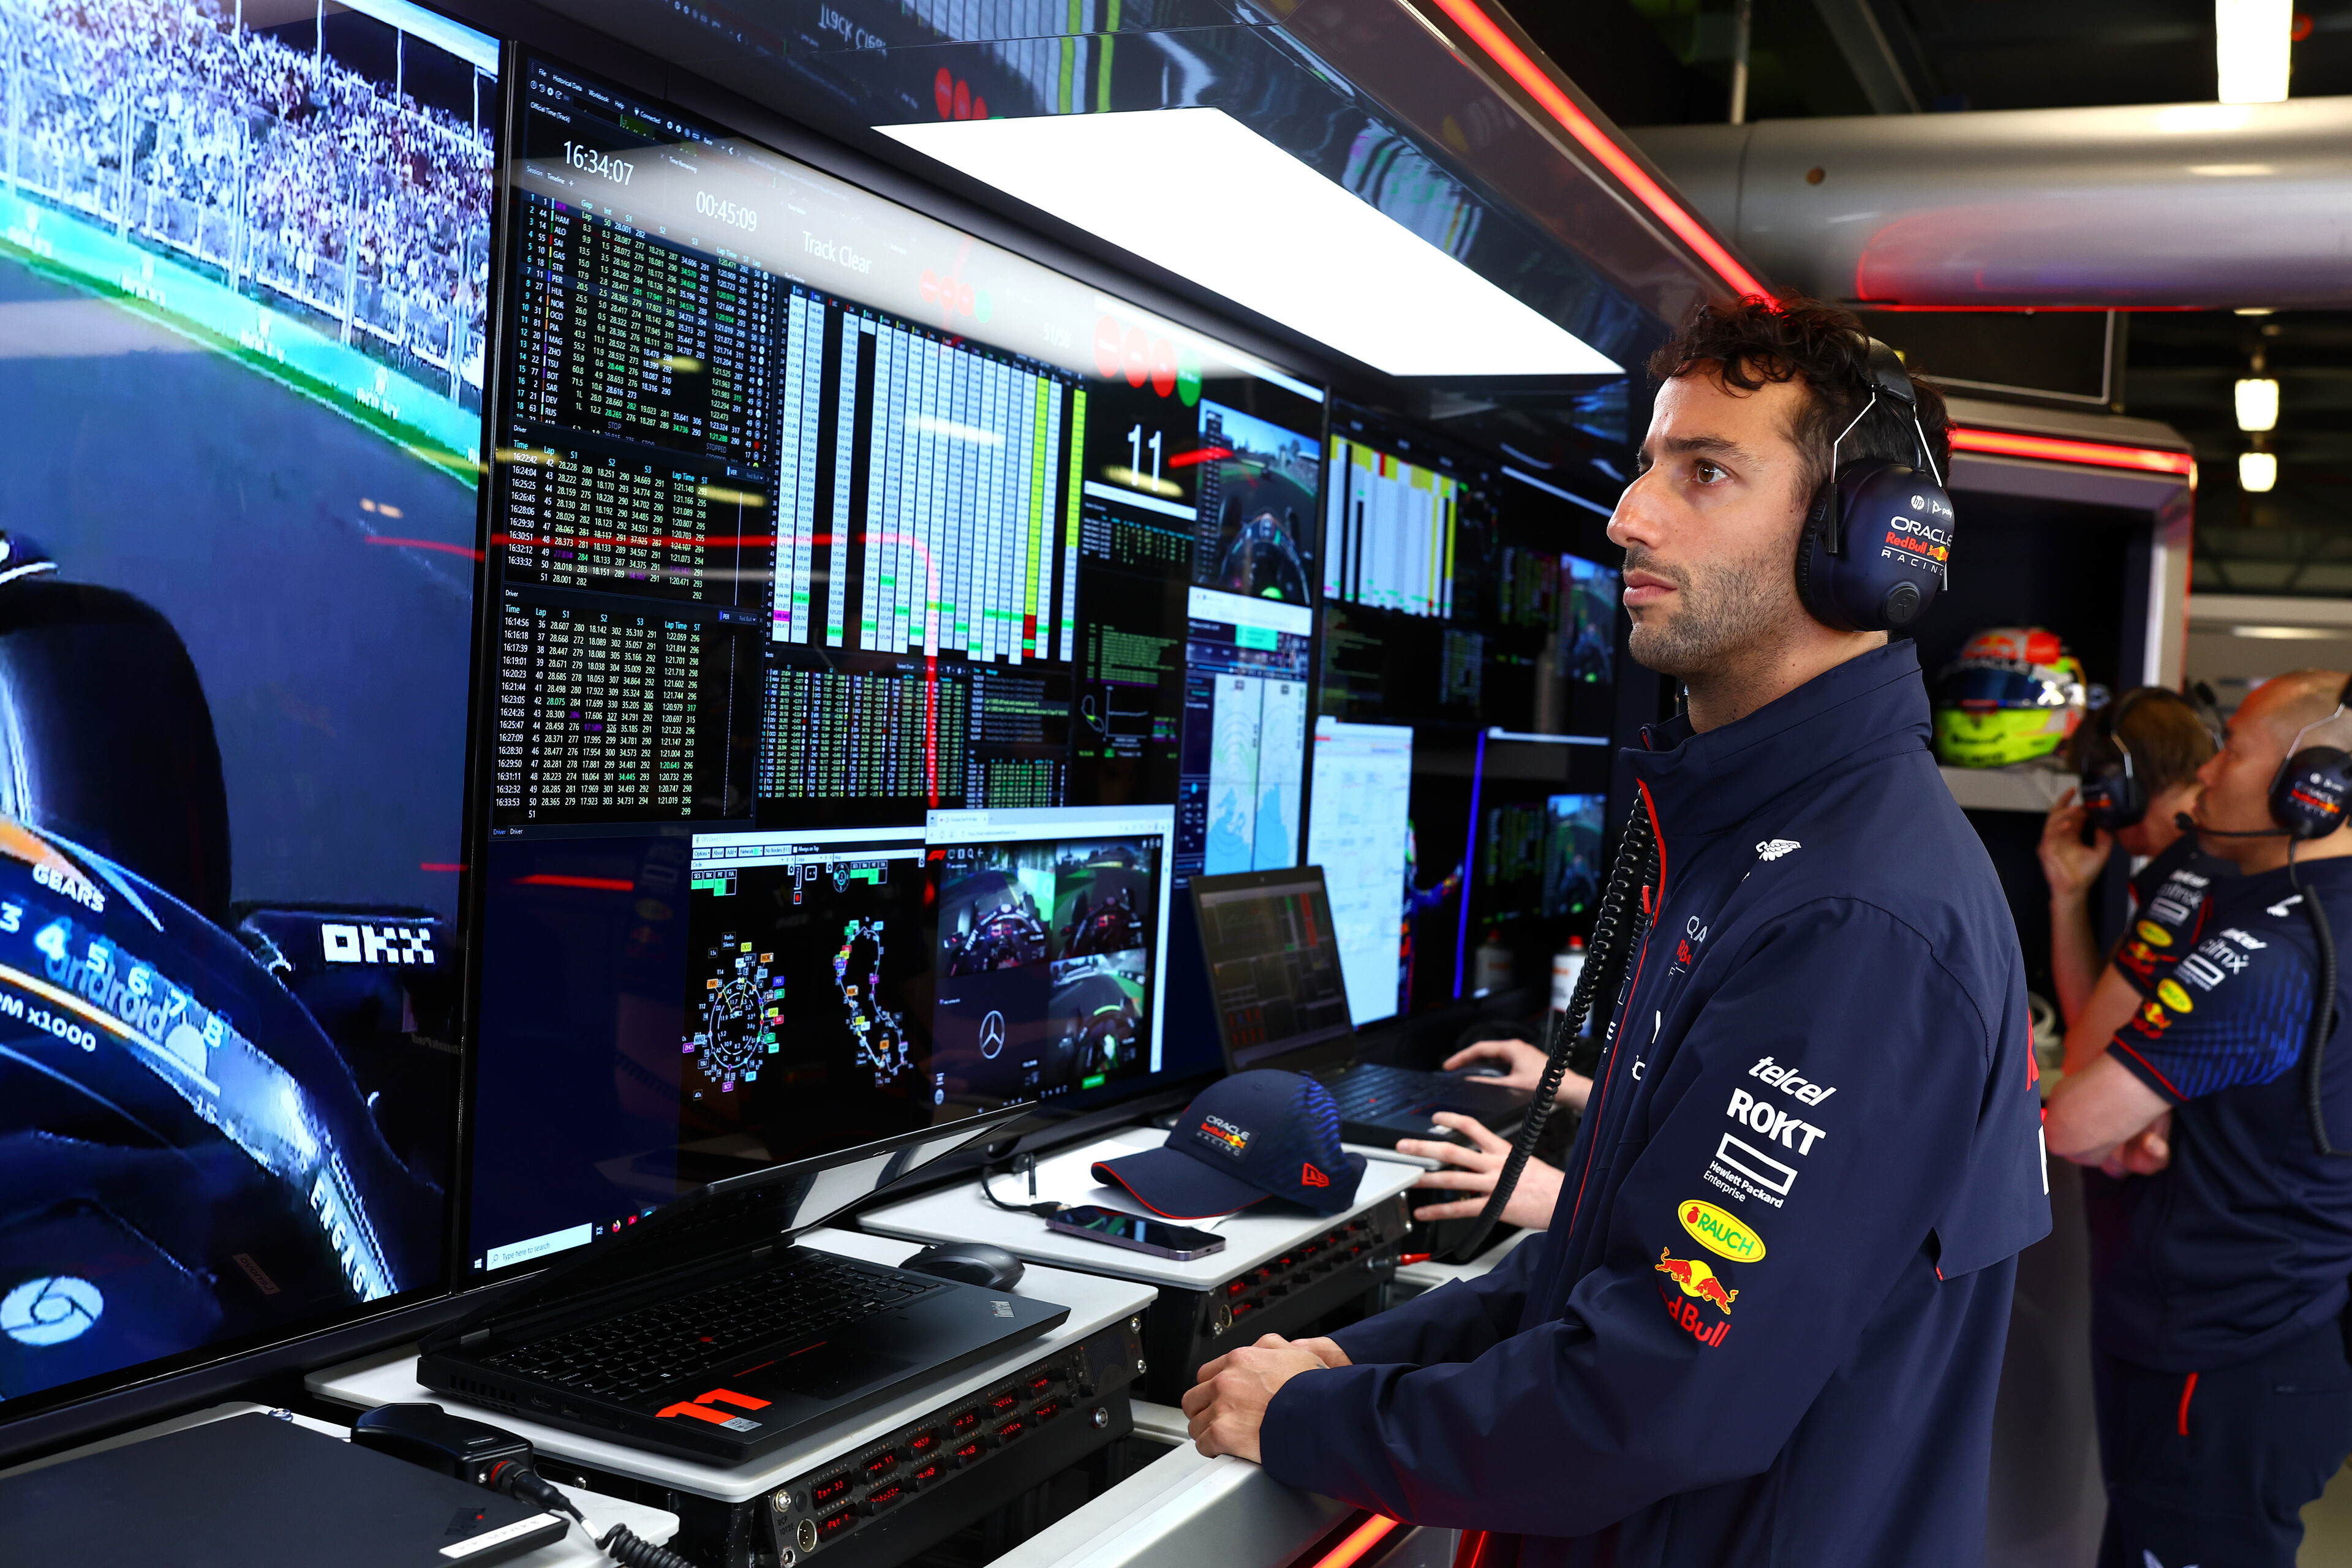 Daniel Ricciardo F1 Red Bull